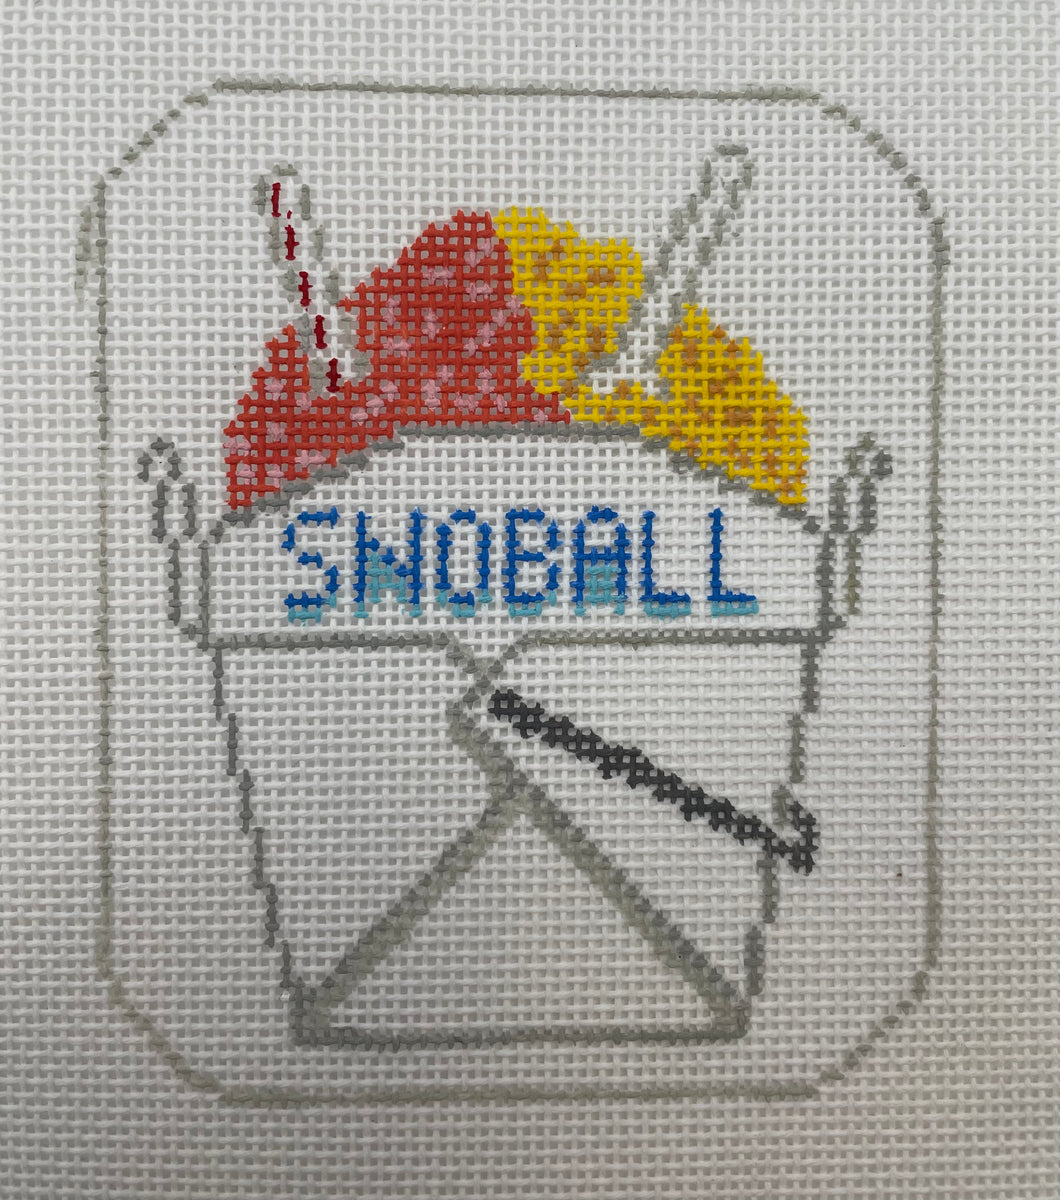 Sno-Ball Needlepoint Ornament